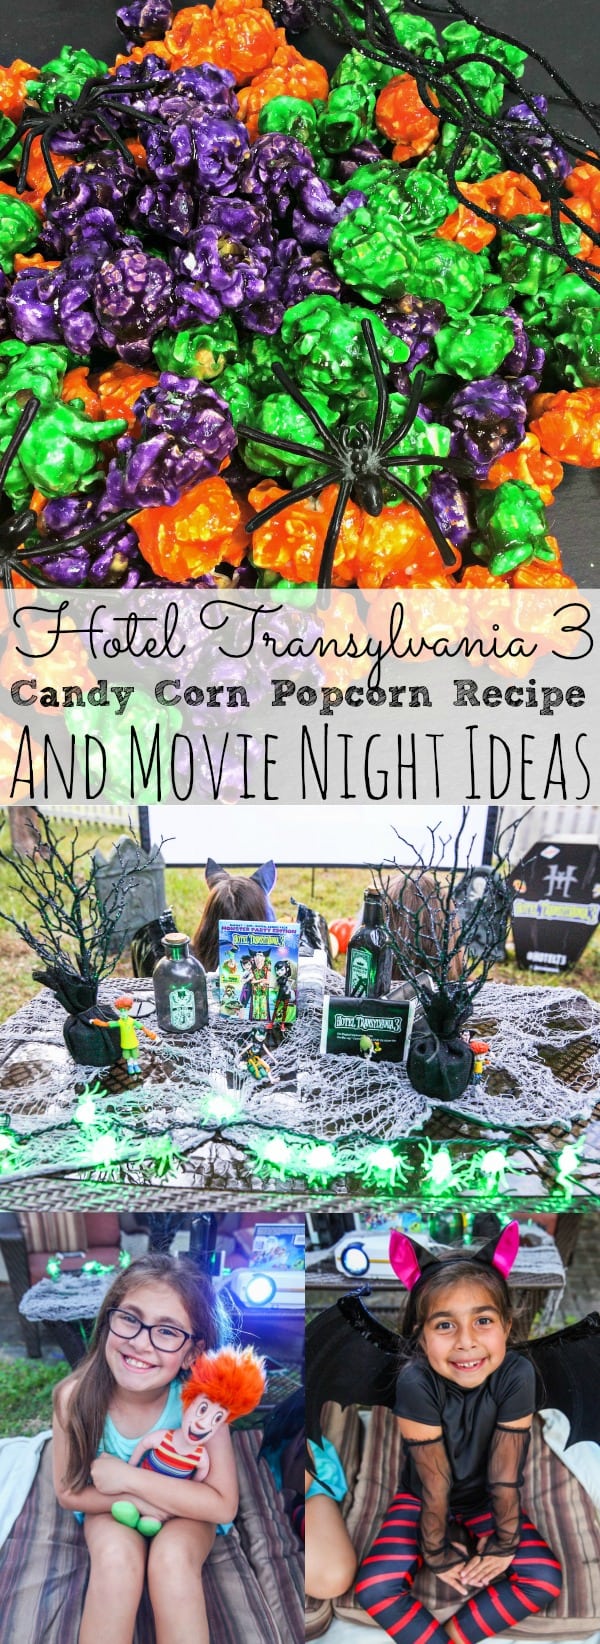 Hotel Transylvania 3 Candy Corn Popcorn Recipe and Movie Night Ideas - simplytodaylife.com